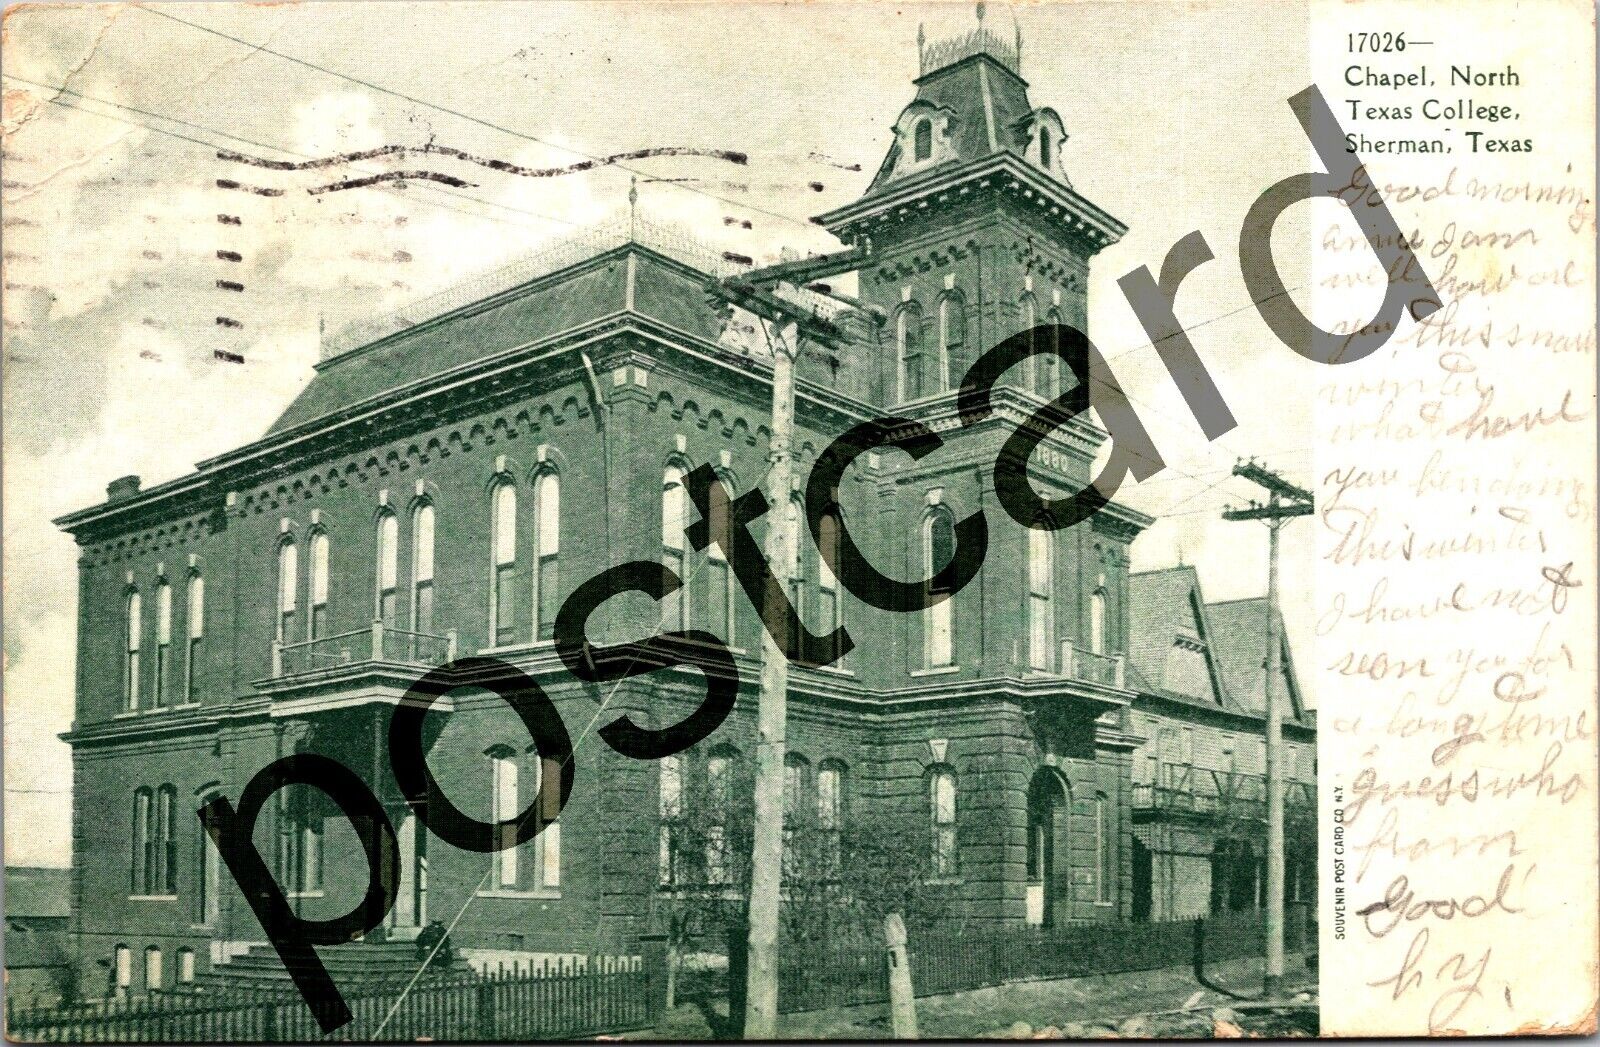 1909 Chapel, North Texas College, SHERMAN, TEXAS, Souvenir Co. postcard jj243